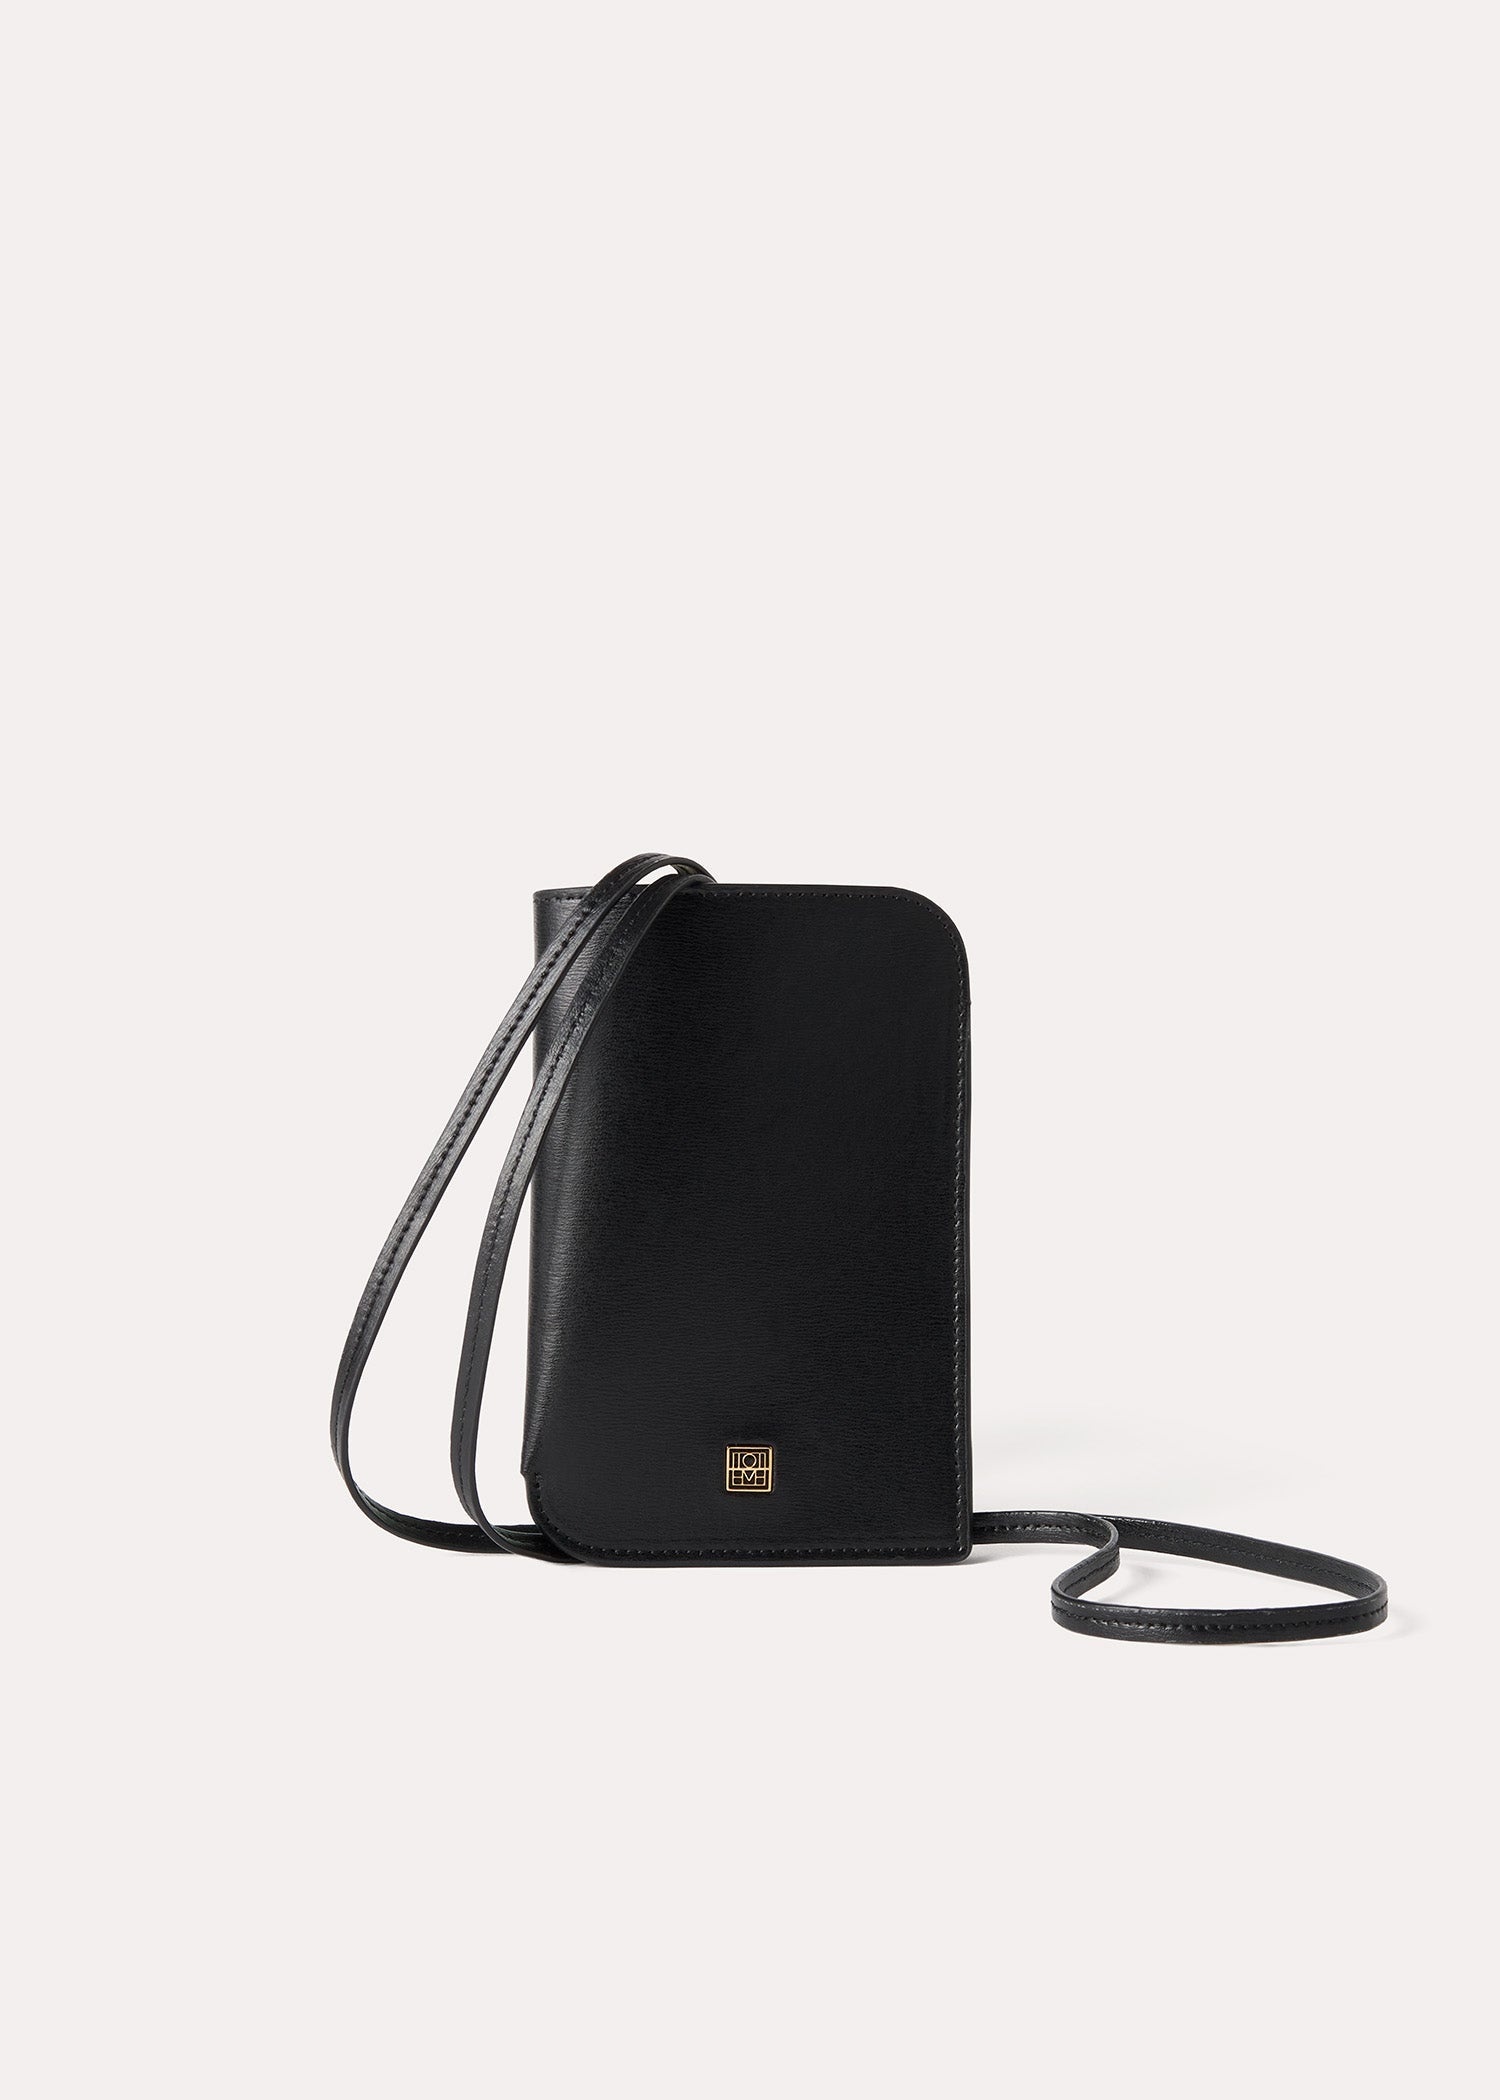 Pocket leather pouch black - 7